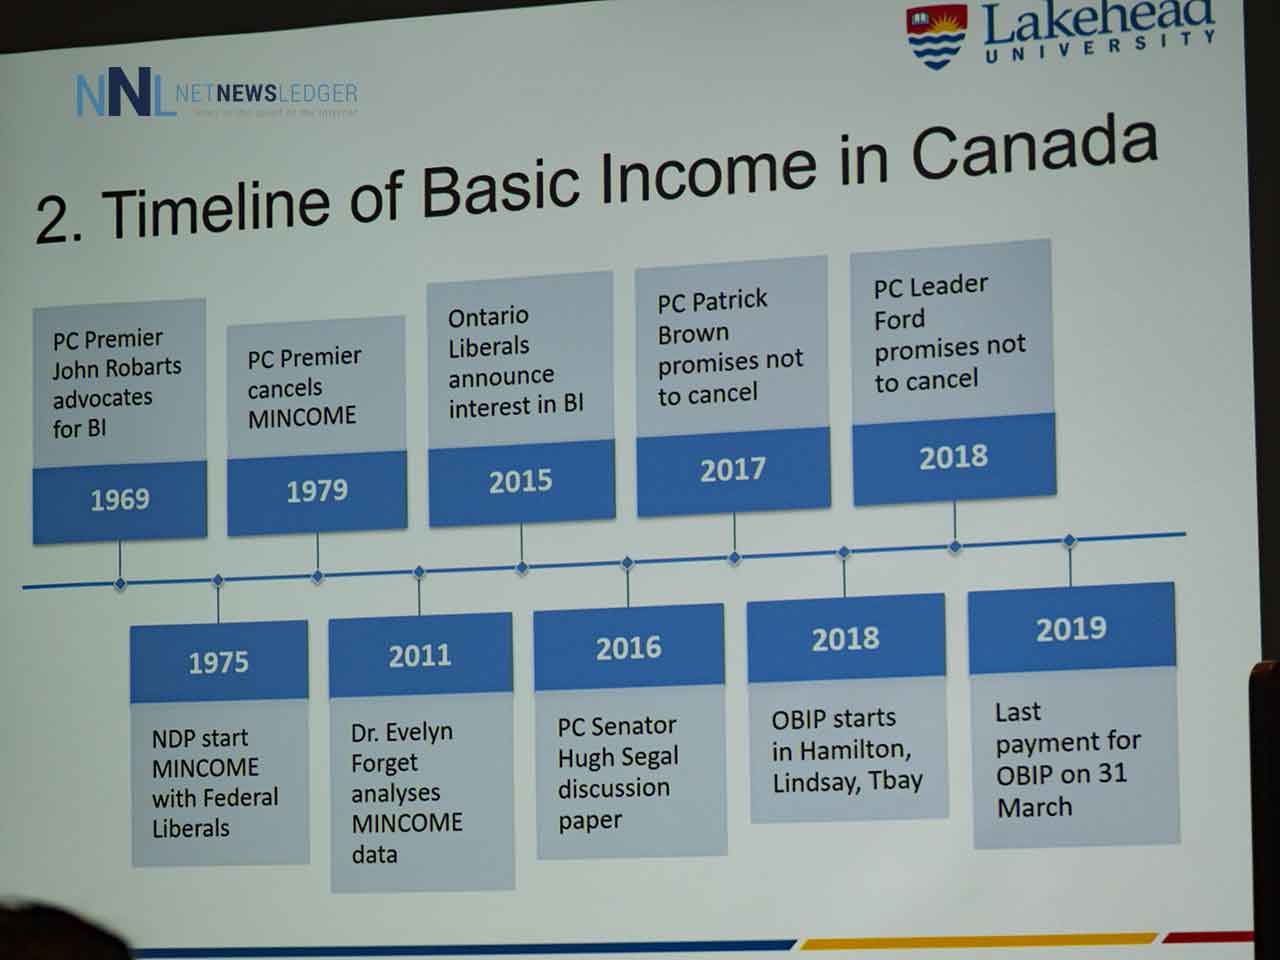 Timeline of Basic Income